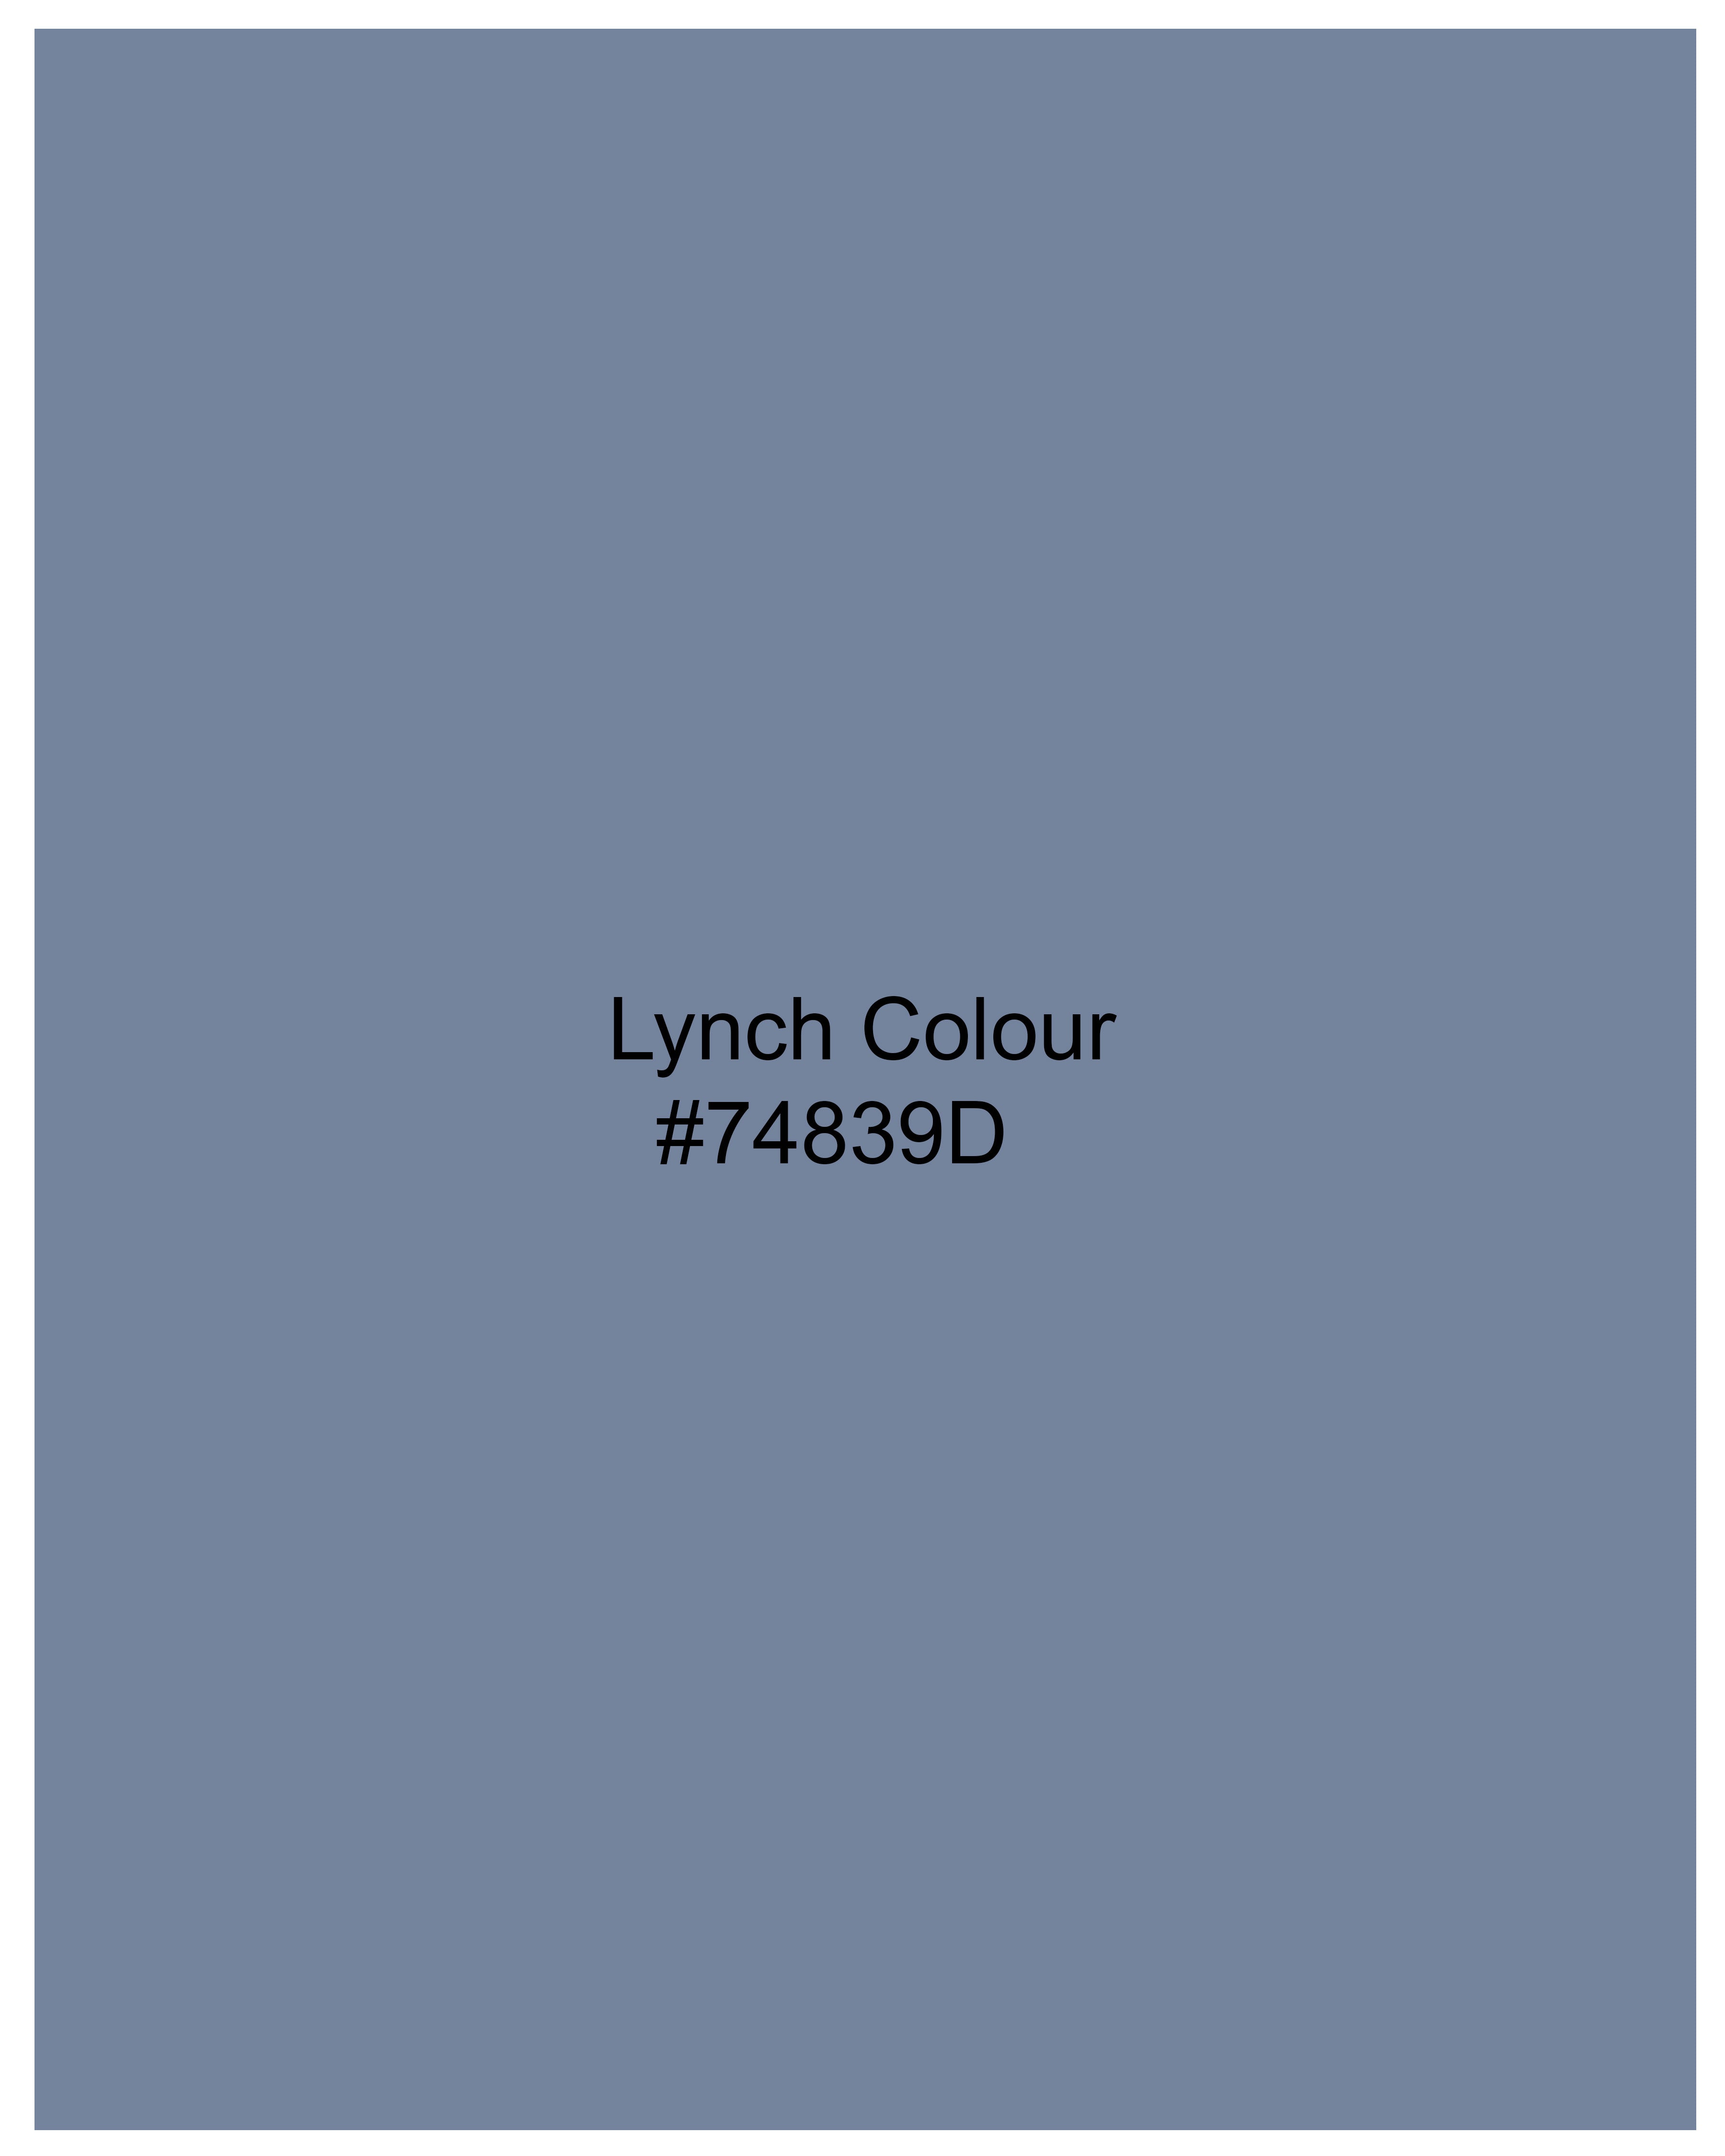 Lynch Blue And Pink Luxurious Linen Designer Shirt 9540-BLE-P222-38, 9540-BLE-P222-H-38, 9540-BLE-P222-39, 9540-BLE-P222-H-39, 9540-BLE-P222-40, 9540-BLE-P222-H-40, 9540-BLE-P222-42, 9540-BLE-P222-H-42, 9540-BLE-P222-44, 9540-BLE-P222-H-44, 9540-BLE-P222-46, 9540-BLE-P222-H-46, 9540-BLE-P222-48, 9540-BLE-P222-H-48, 9540-BLE-P222-50, 9540-BLE-P222-H-50, 9540-BLE-P222-52, 9540-BLE-P222-H-52